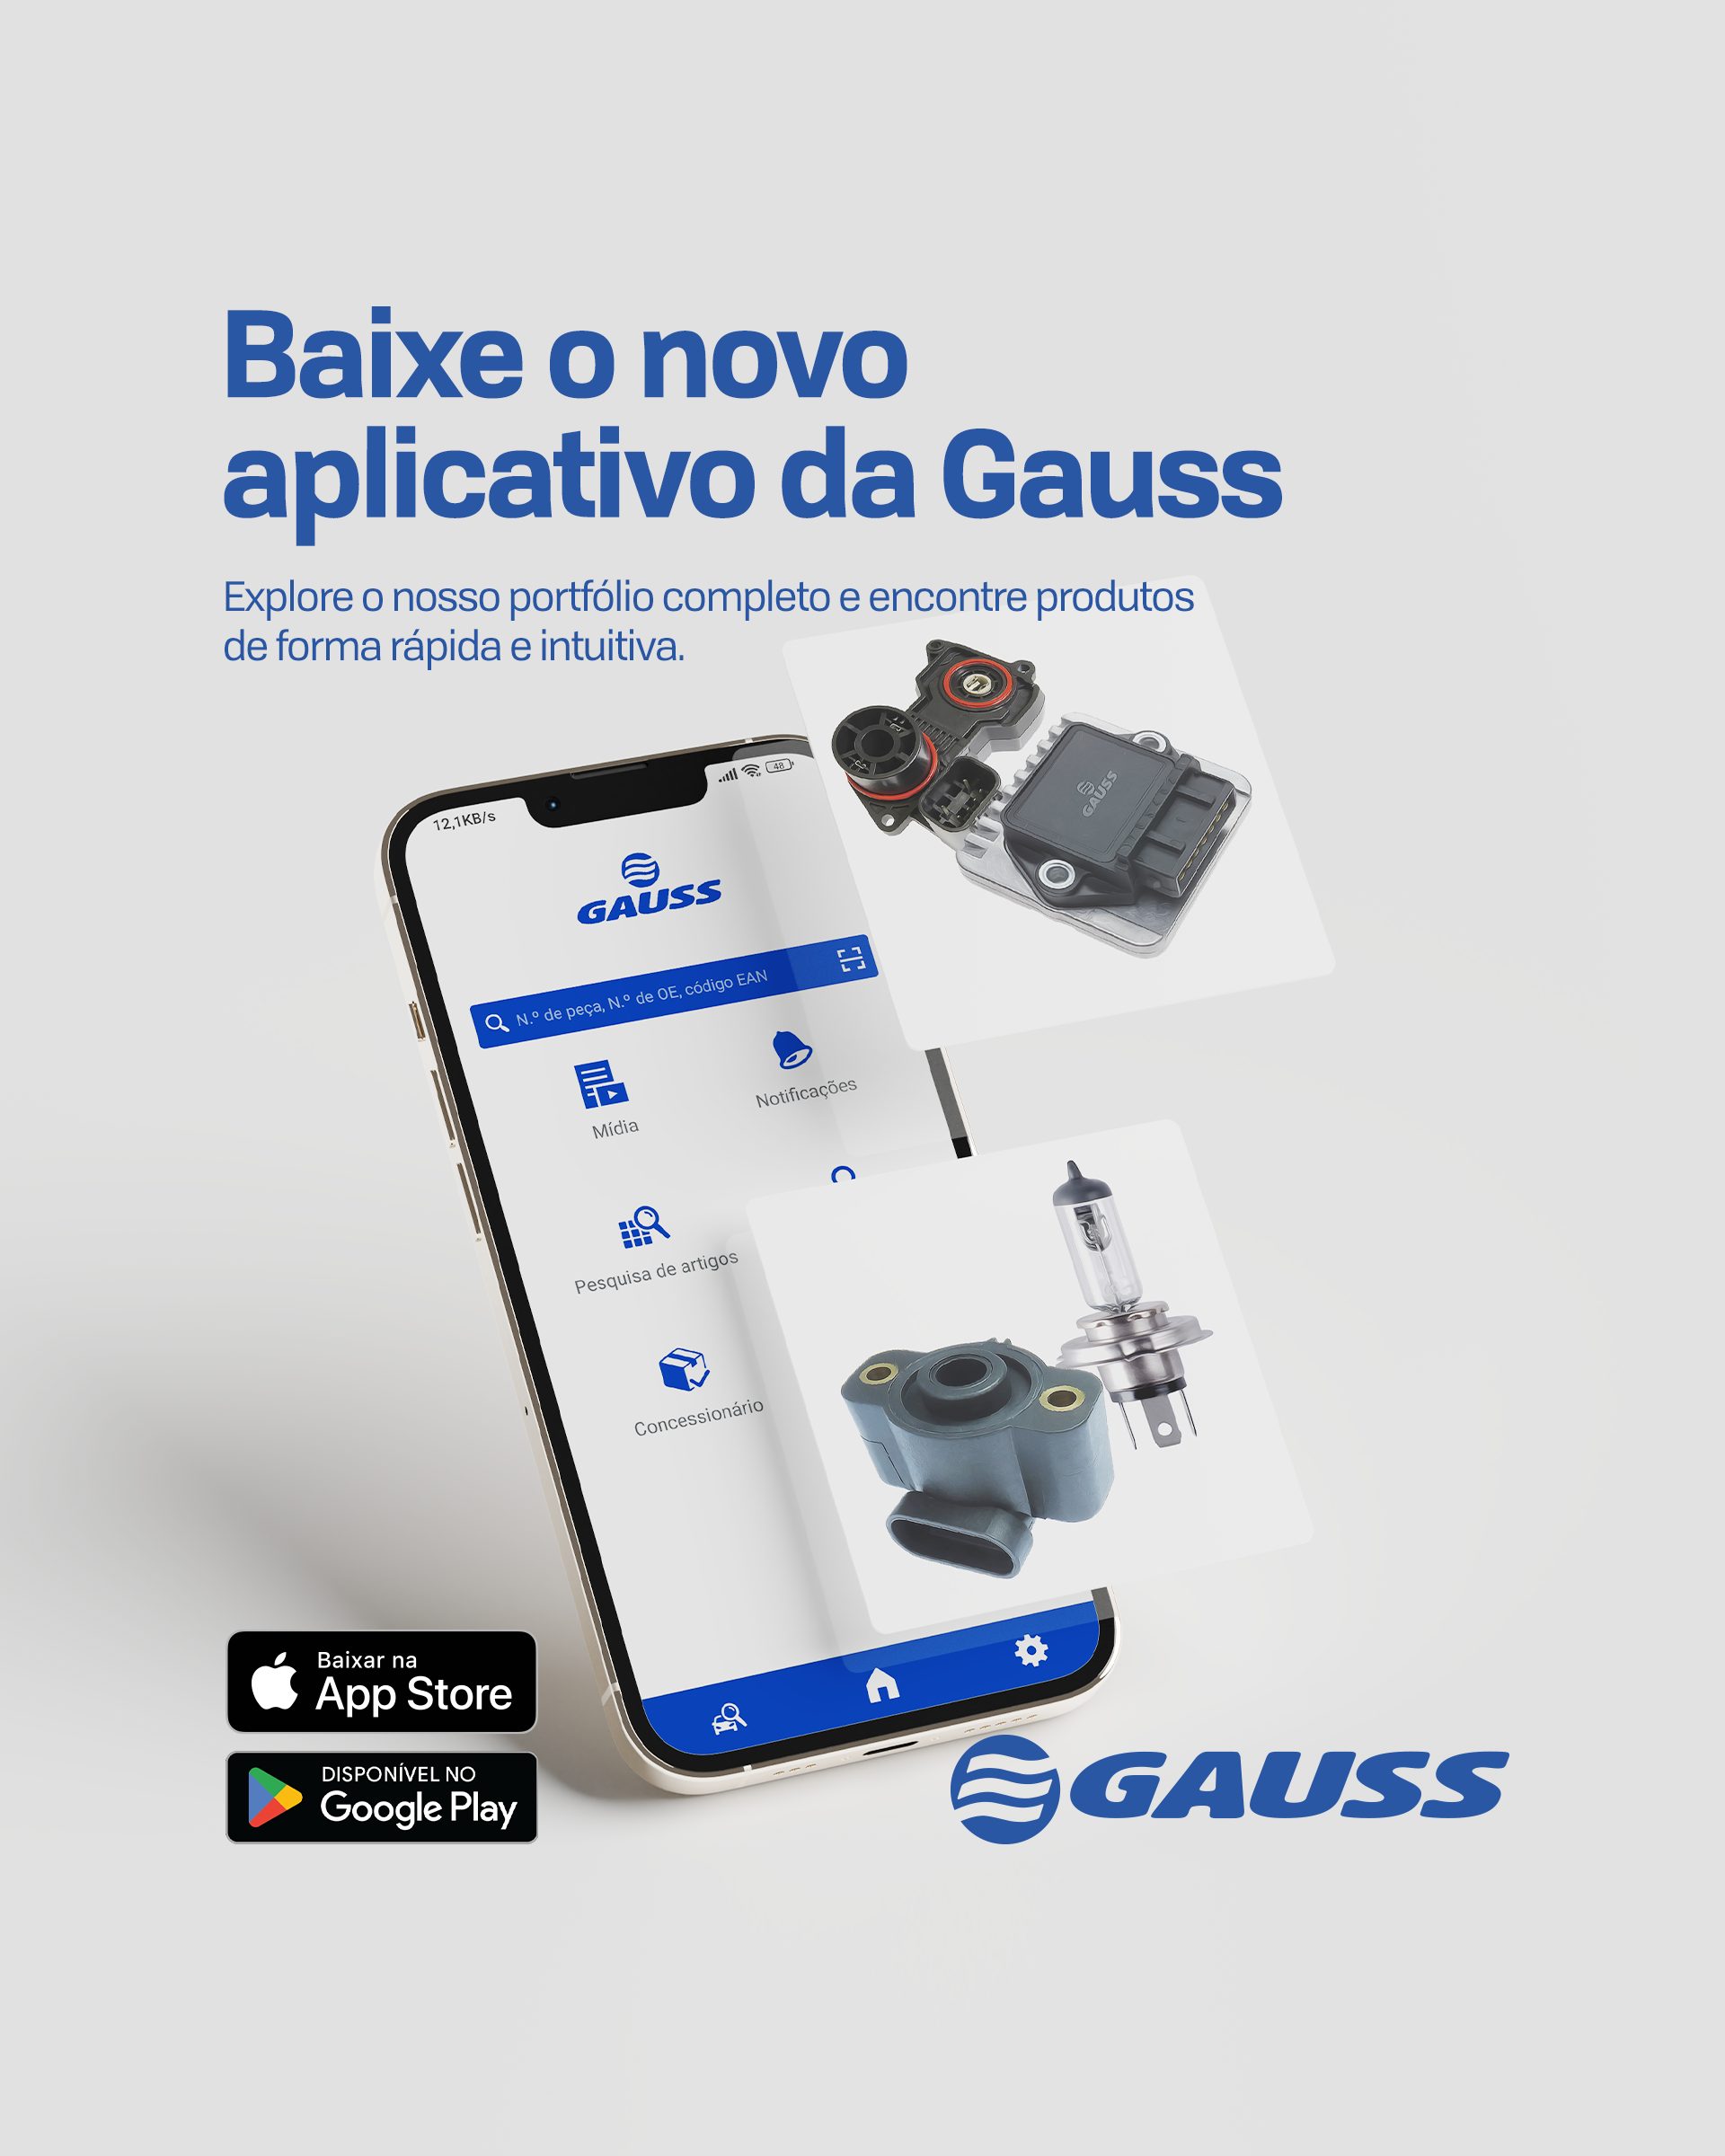 Novo aplicativo da Gauss